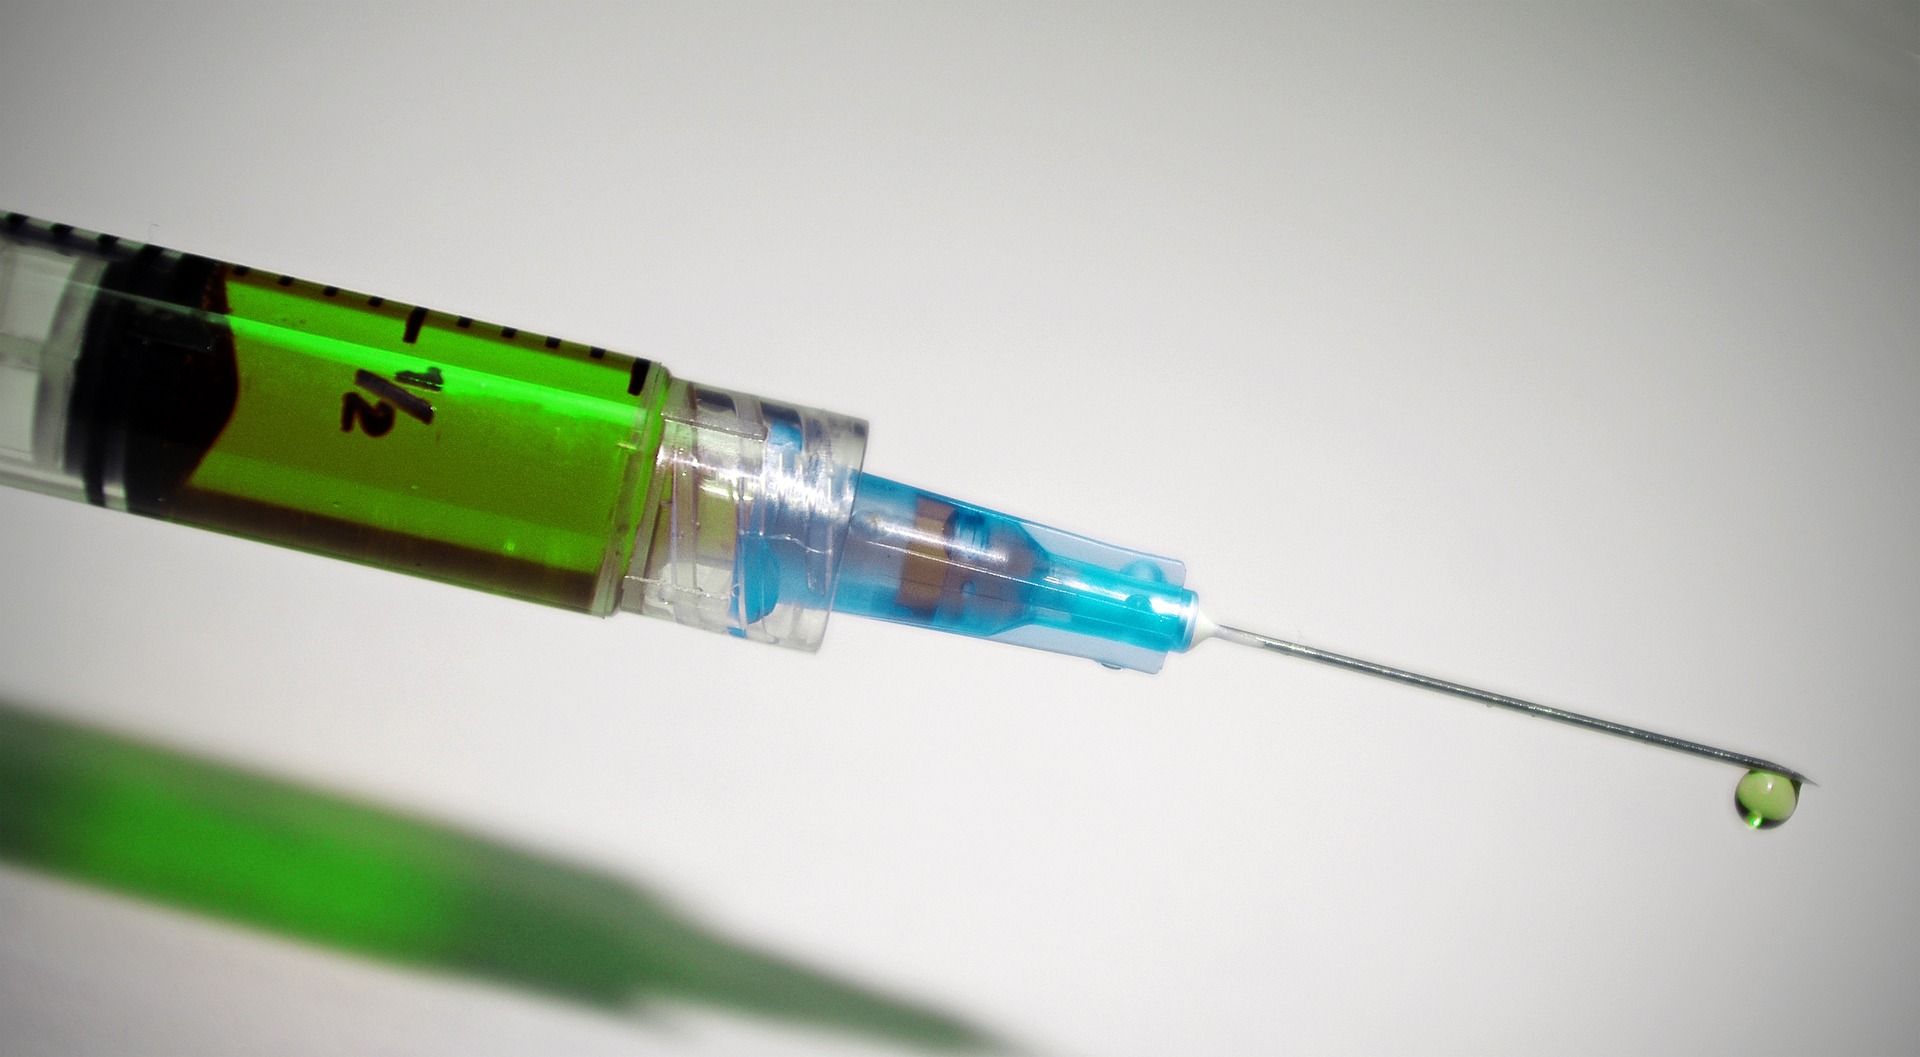 syringe containing green liquid